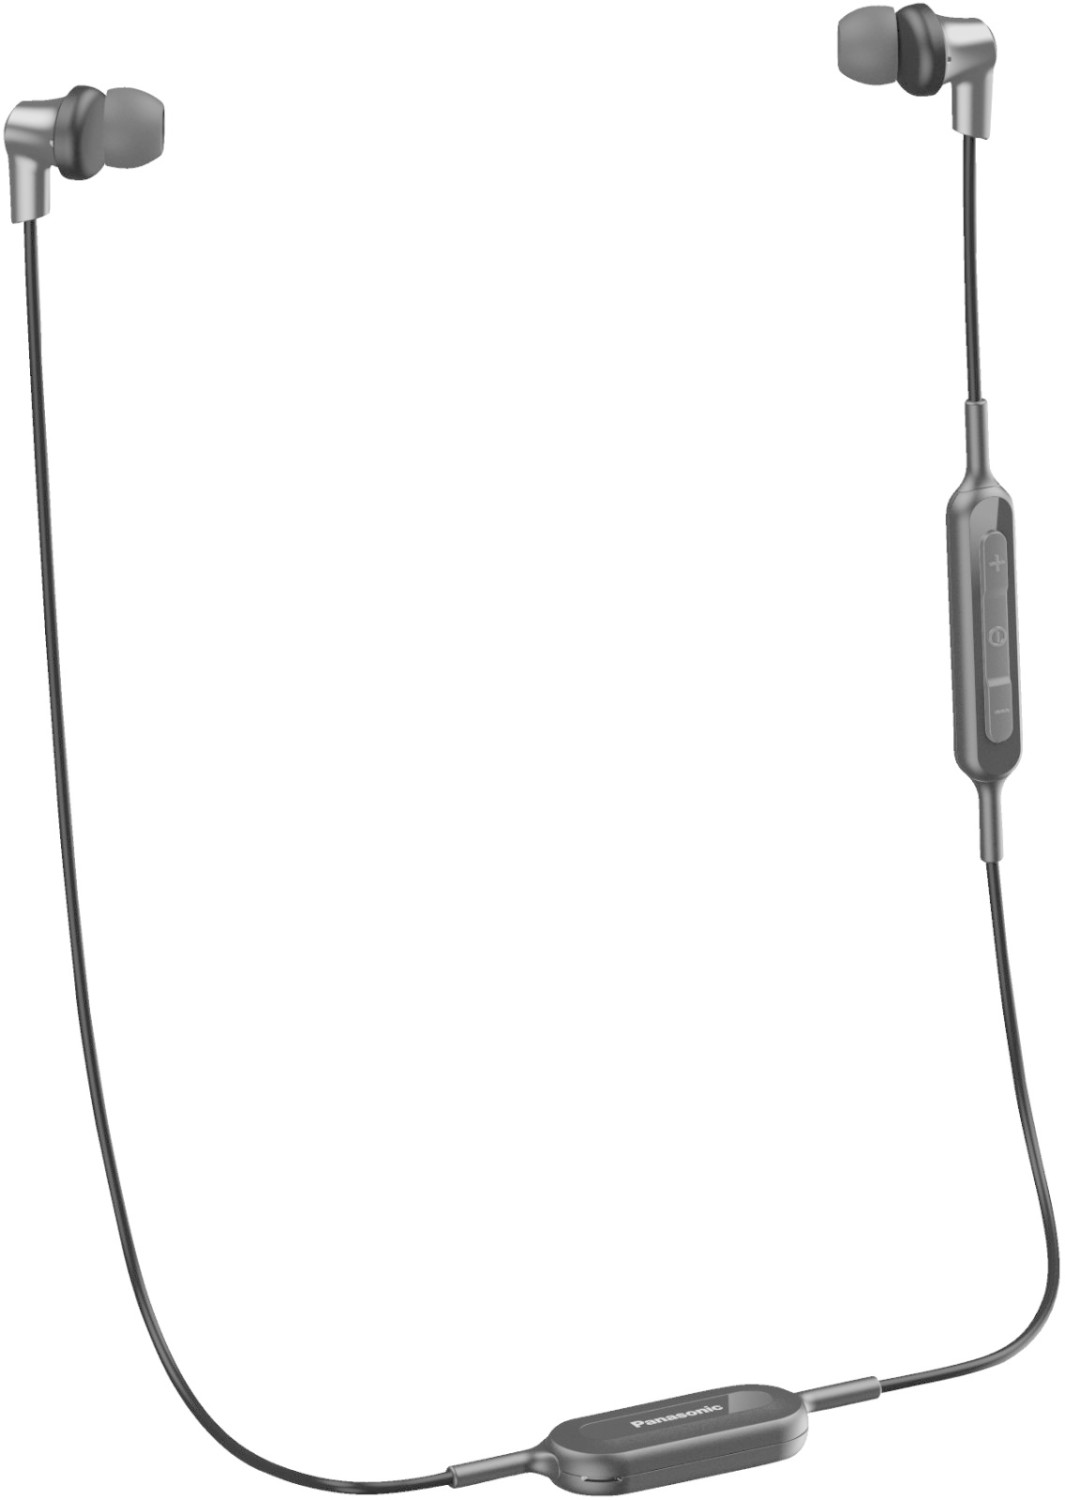 Bild zu Bluetooth-Kopfhörer Panasonic RP-NJ300BE-K für 19,99€ (Vergleich: 27,98€)